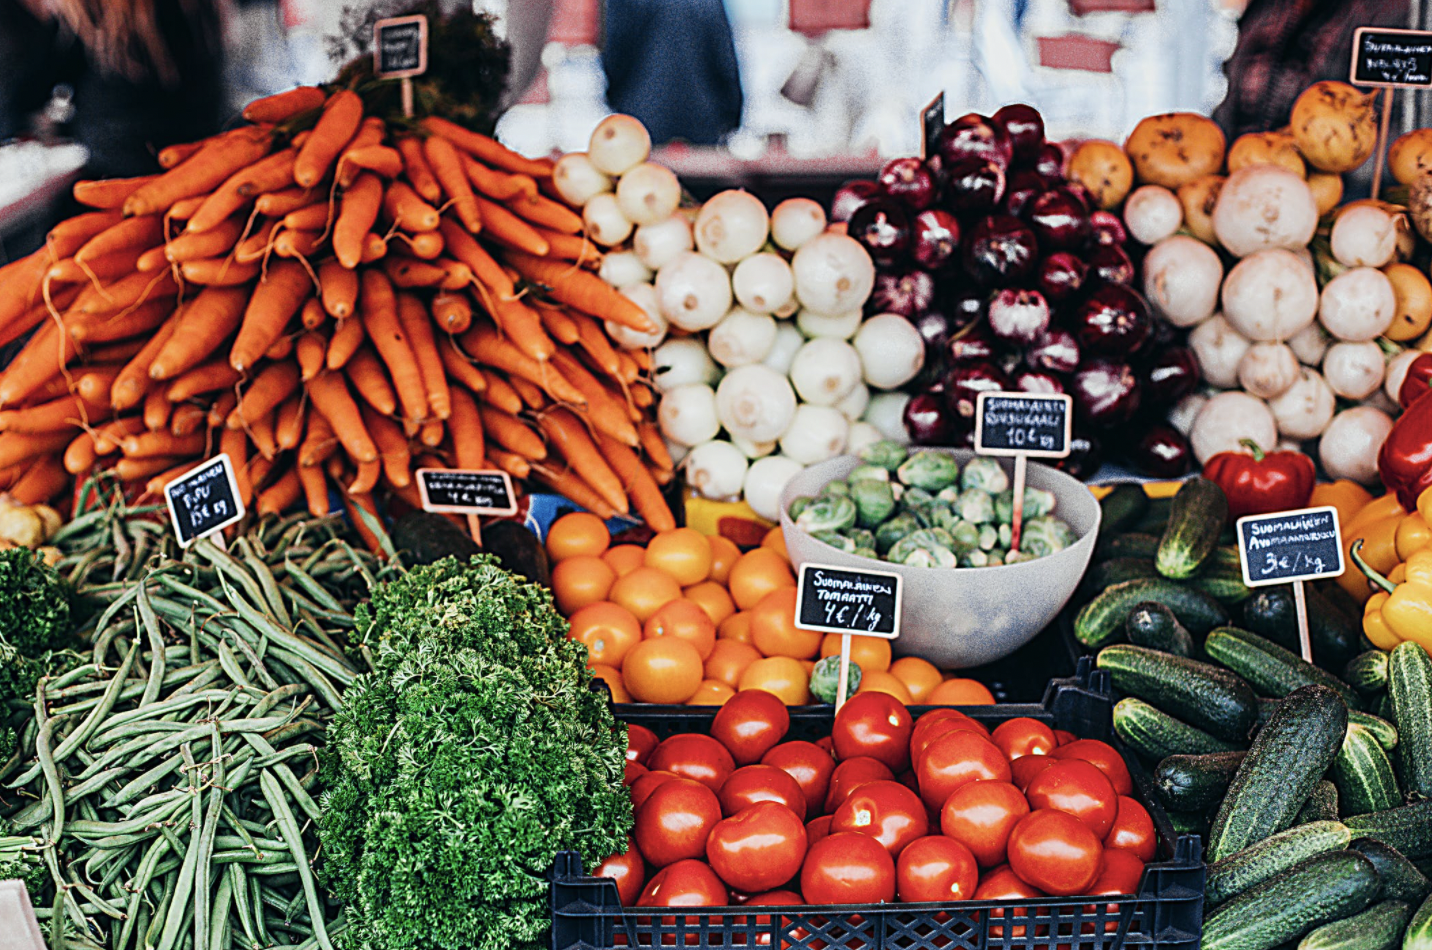 Овощи на рынке. Прилавок с овощами и фруктами. Овощи и фрукты на рынке. Овощи и фрукты на базаре. Vegetables market